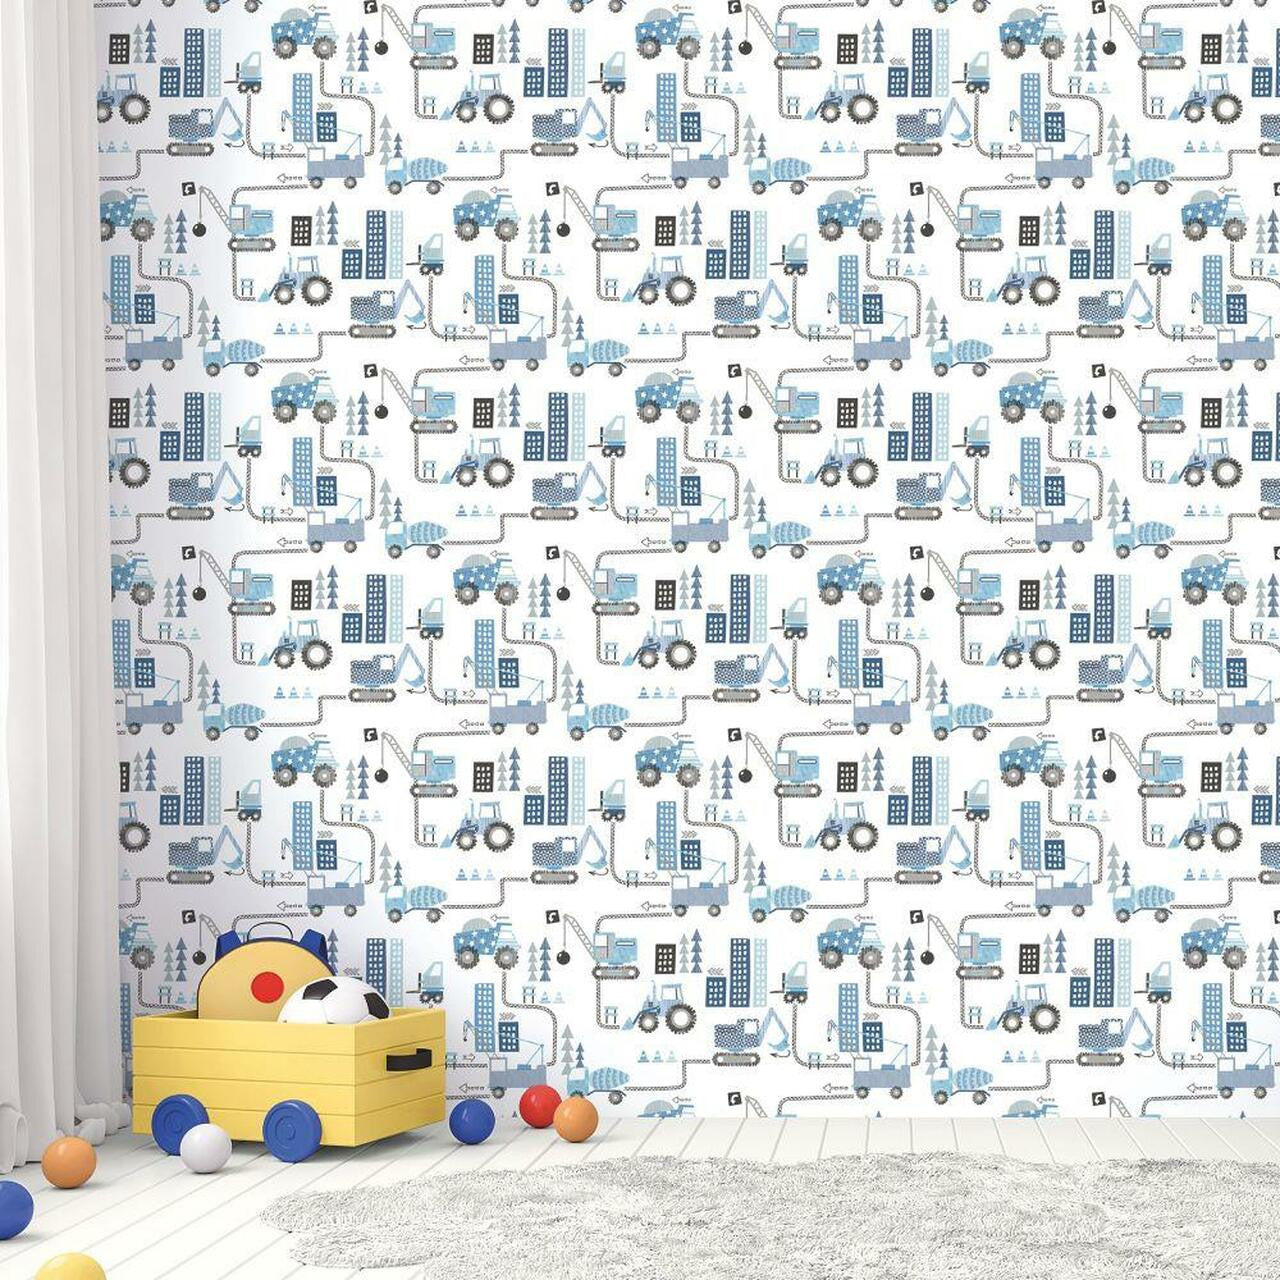 Construction Tiny Tots 2 Nursery Room Wallpaper - Blue